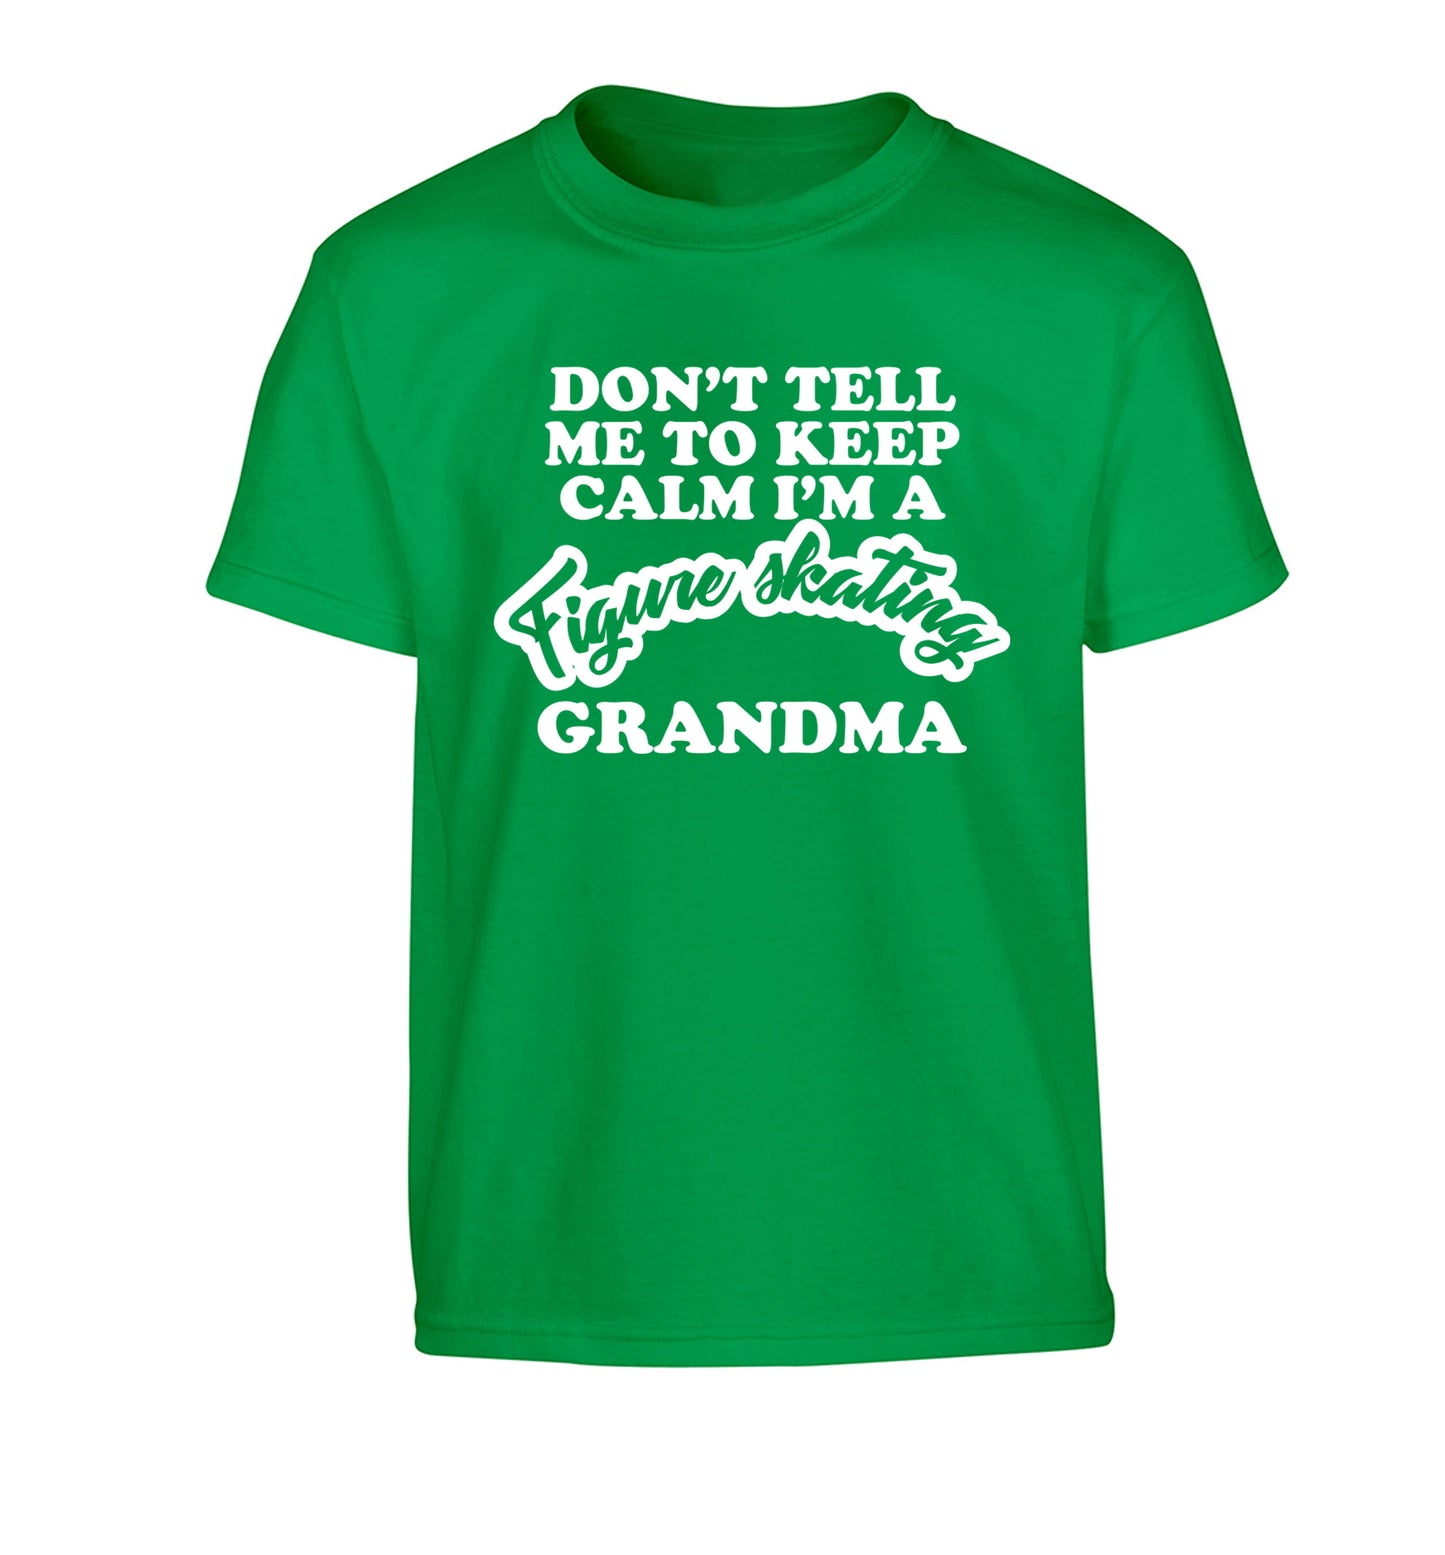 Don't tell me to keep calm I'm a figure skating grandma Children's green Tshirt 12-14 Years